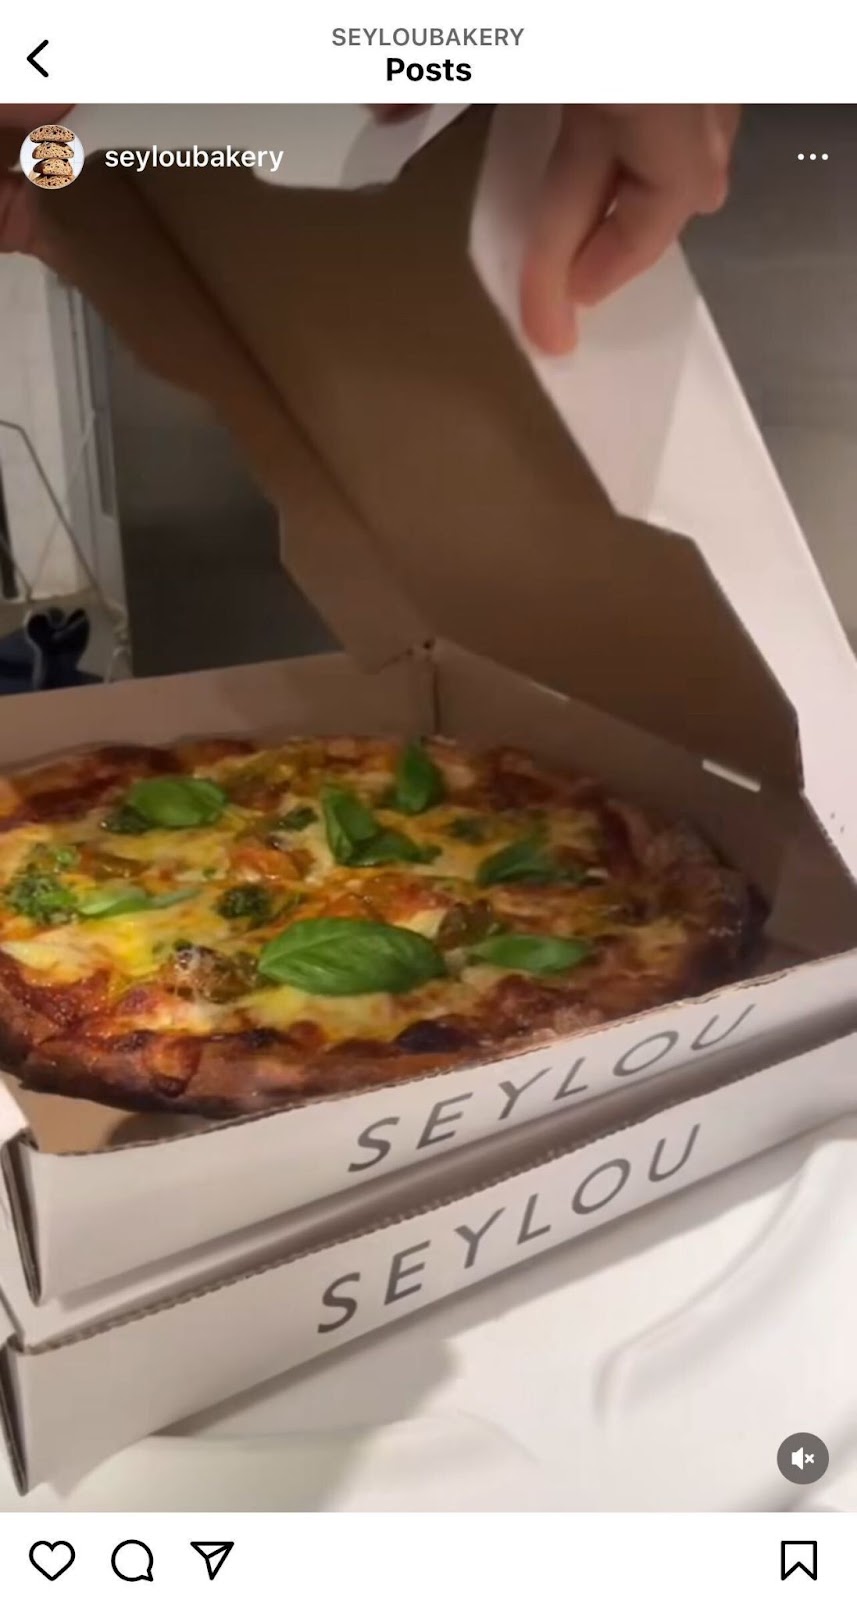 Seylou Bakery pizza in Washington, D.C.